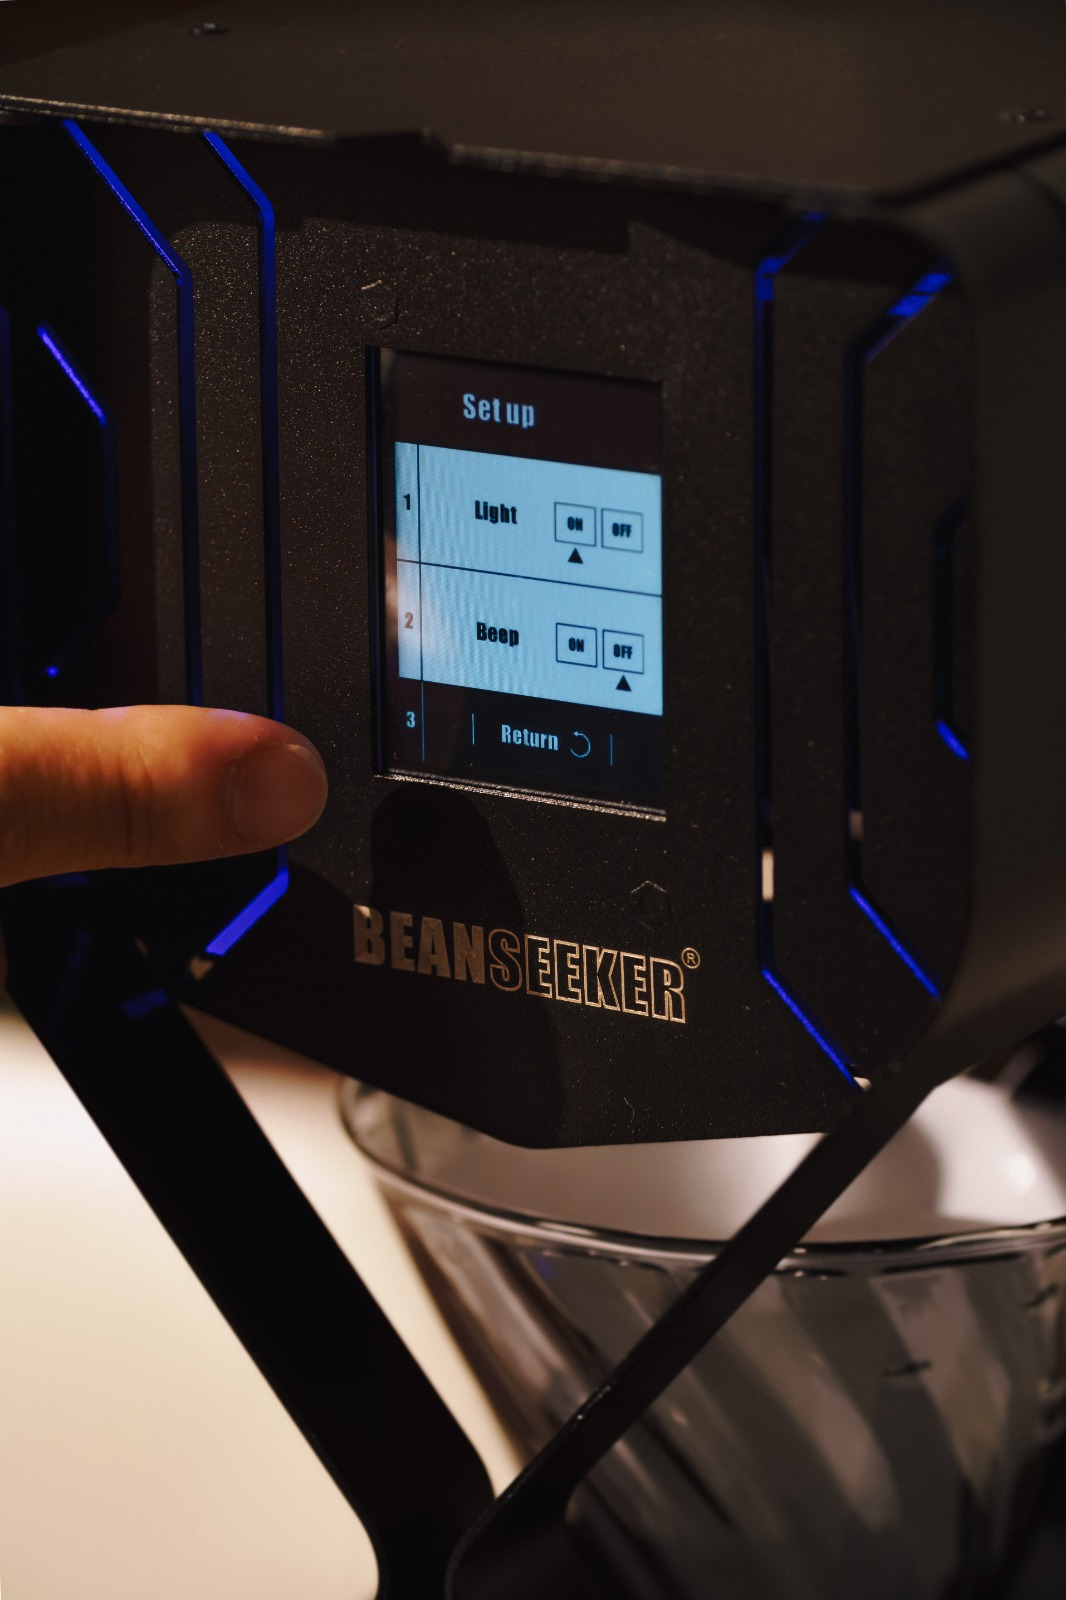 Automated ice coffee machine